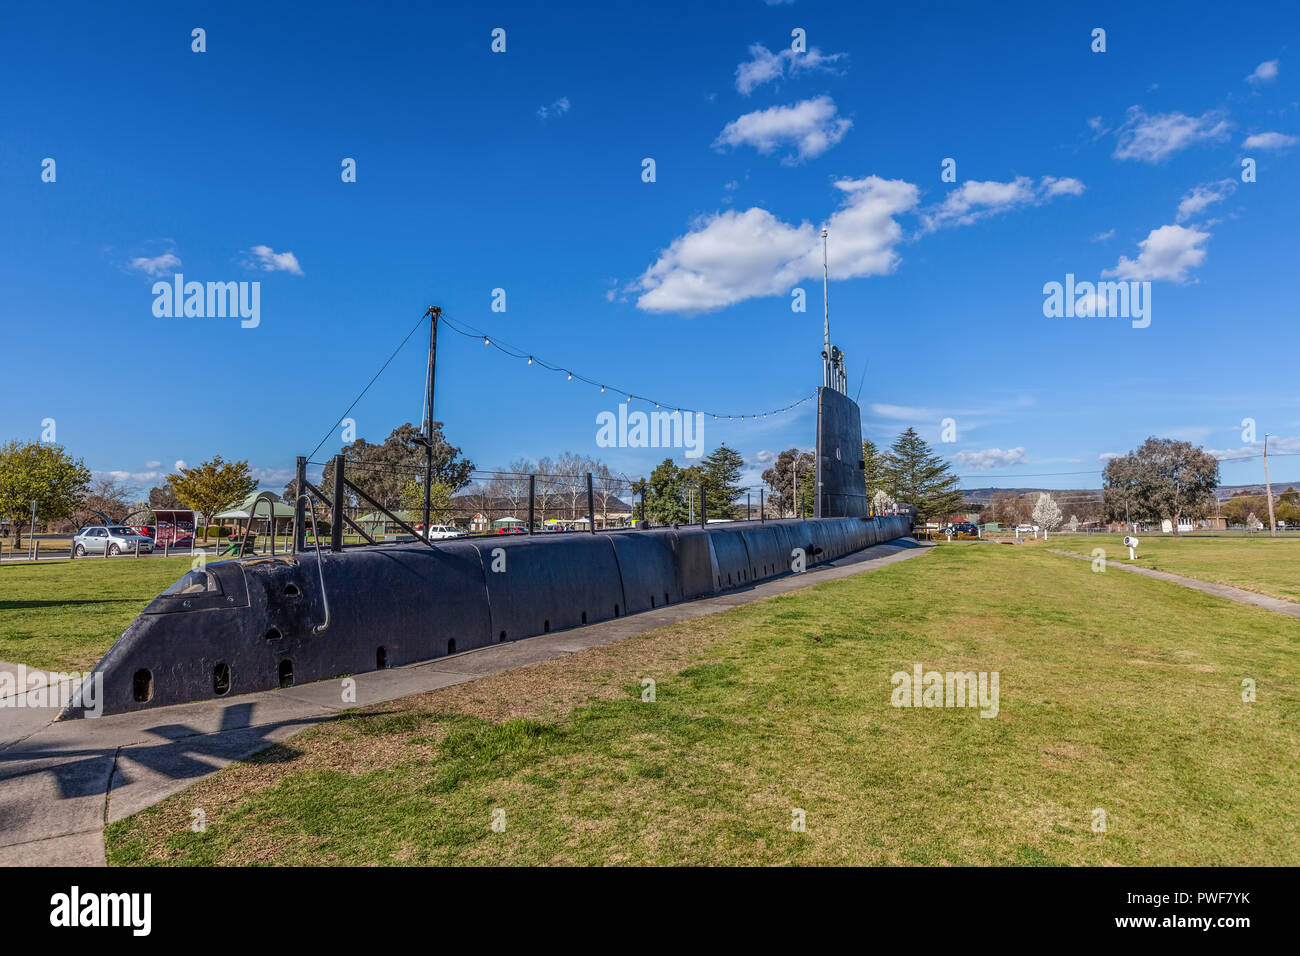 Holbrook, Australia - September 24, 2018: HMAS Otway submarine in a park Stock Photo